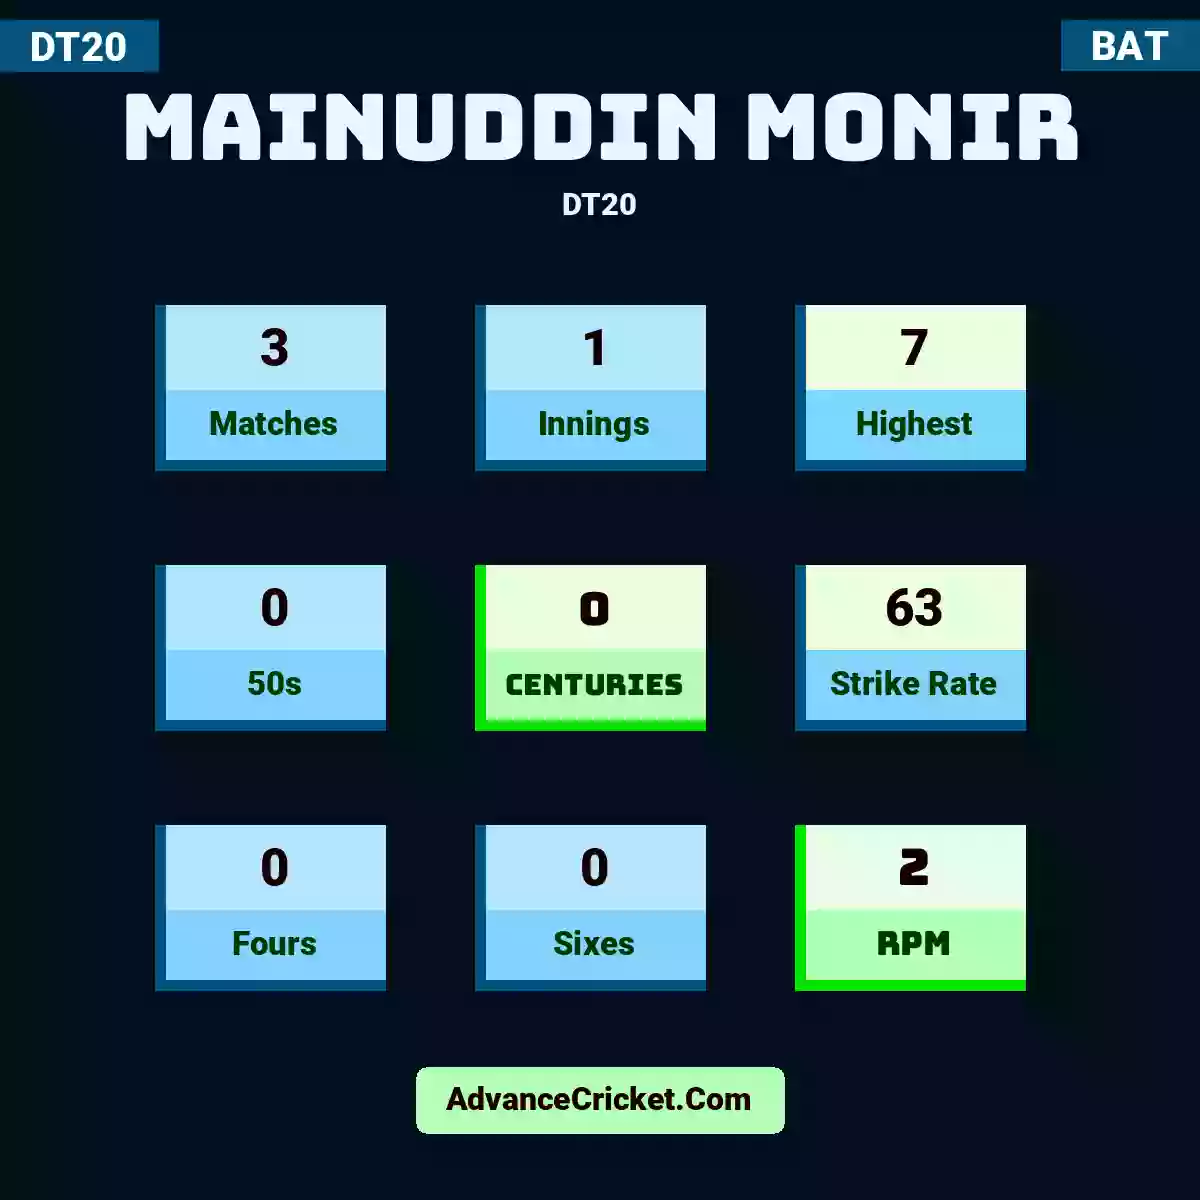 Mainuddin Monir DT20 , Mainuddin Monir played 3 matches, scored 7 runs as highest, 0 half-centuries, and 0 centuries, with a strike rate of 63. M.Monir hit 0 fours and 0 sixes, with an RPM of 2.